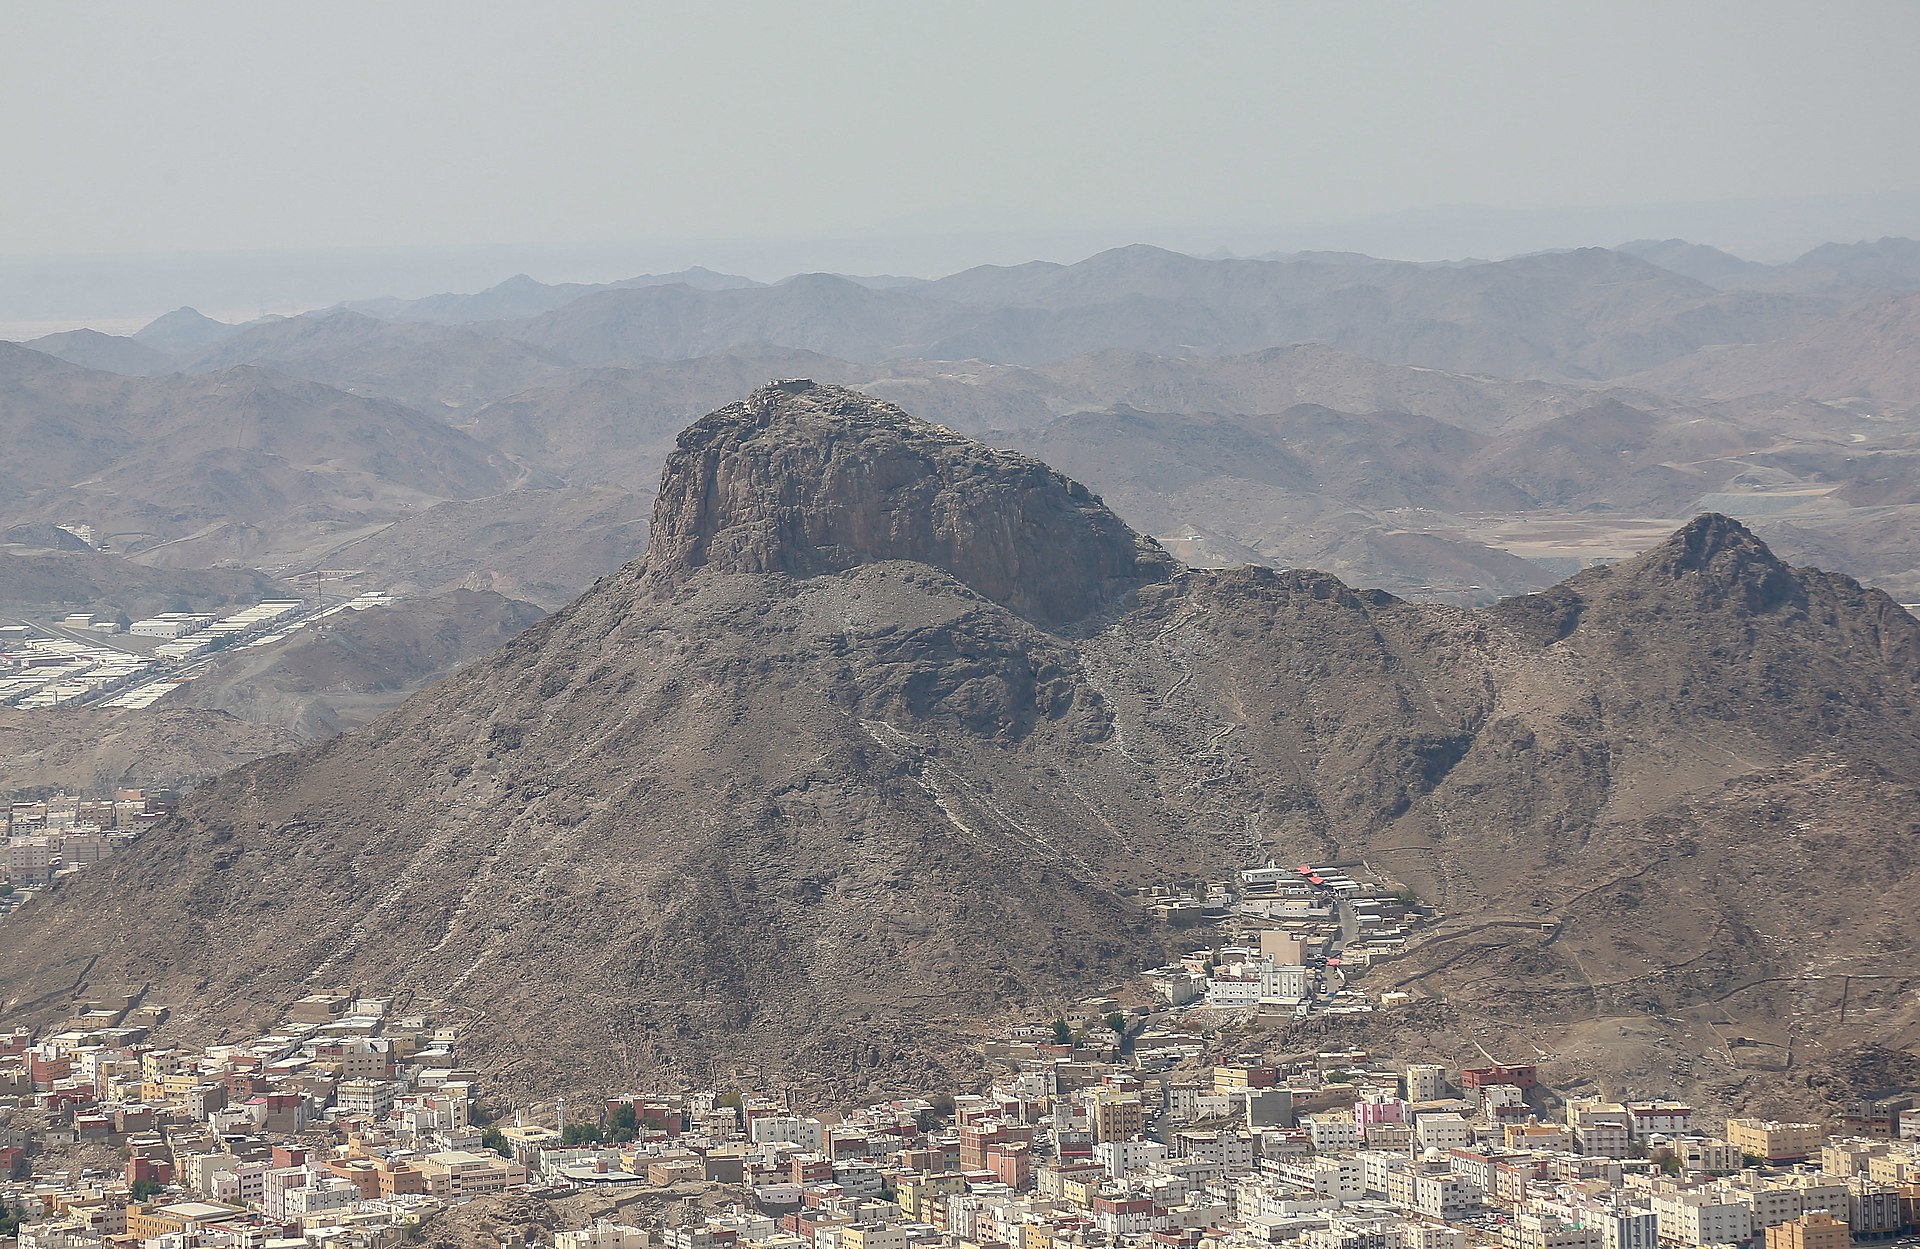 Overview of Jabal an-Nour